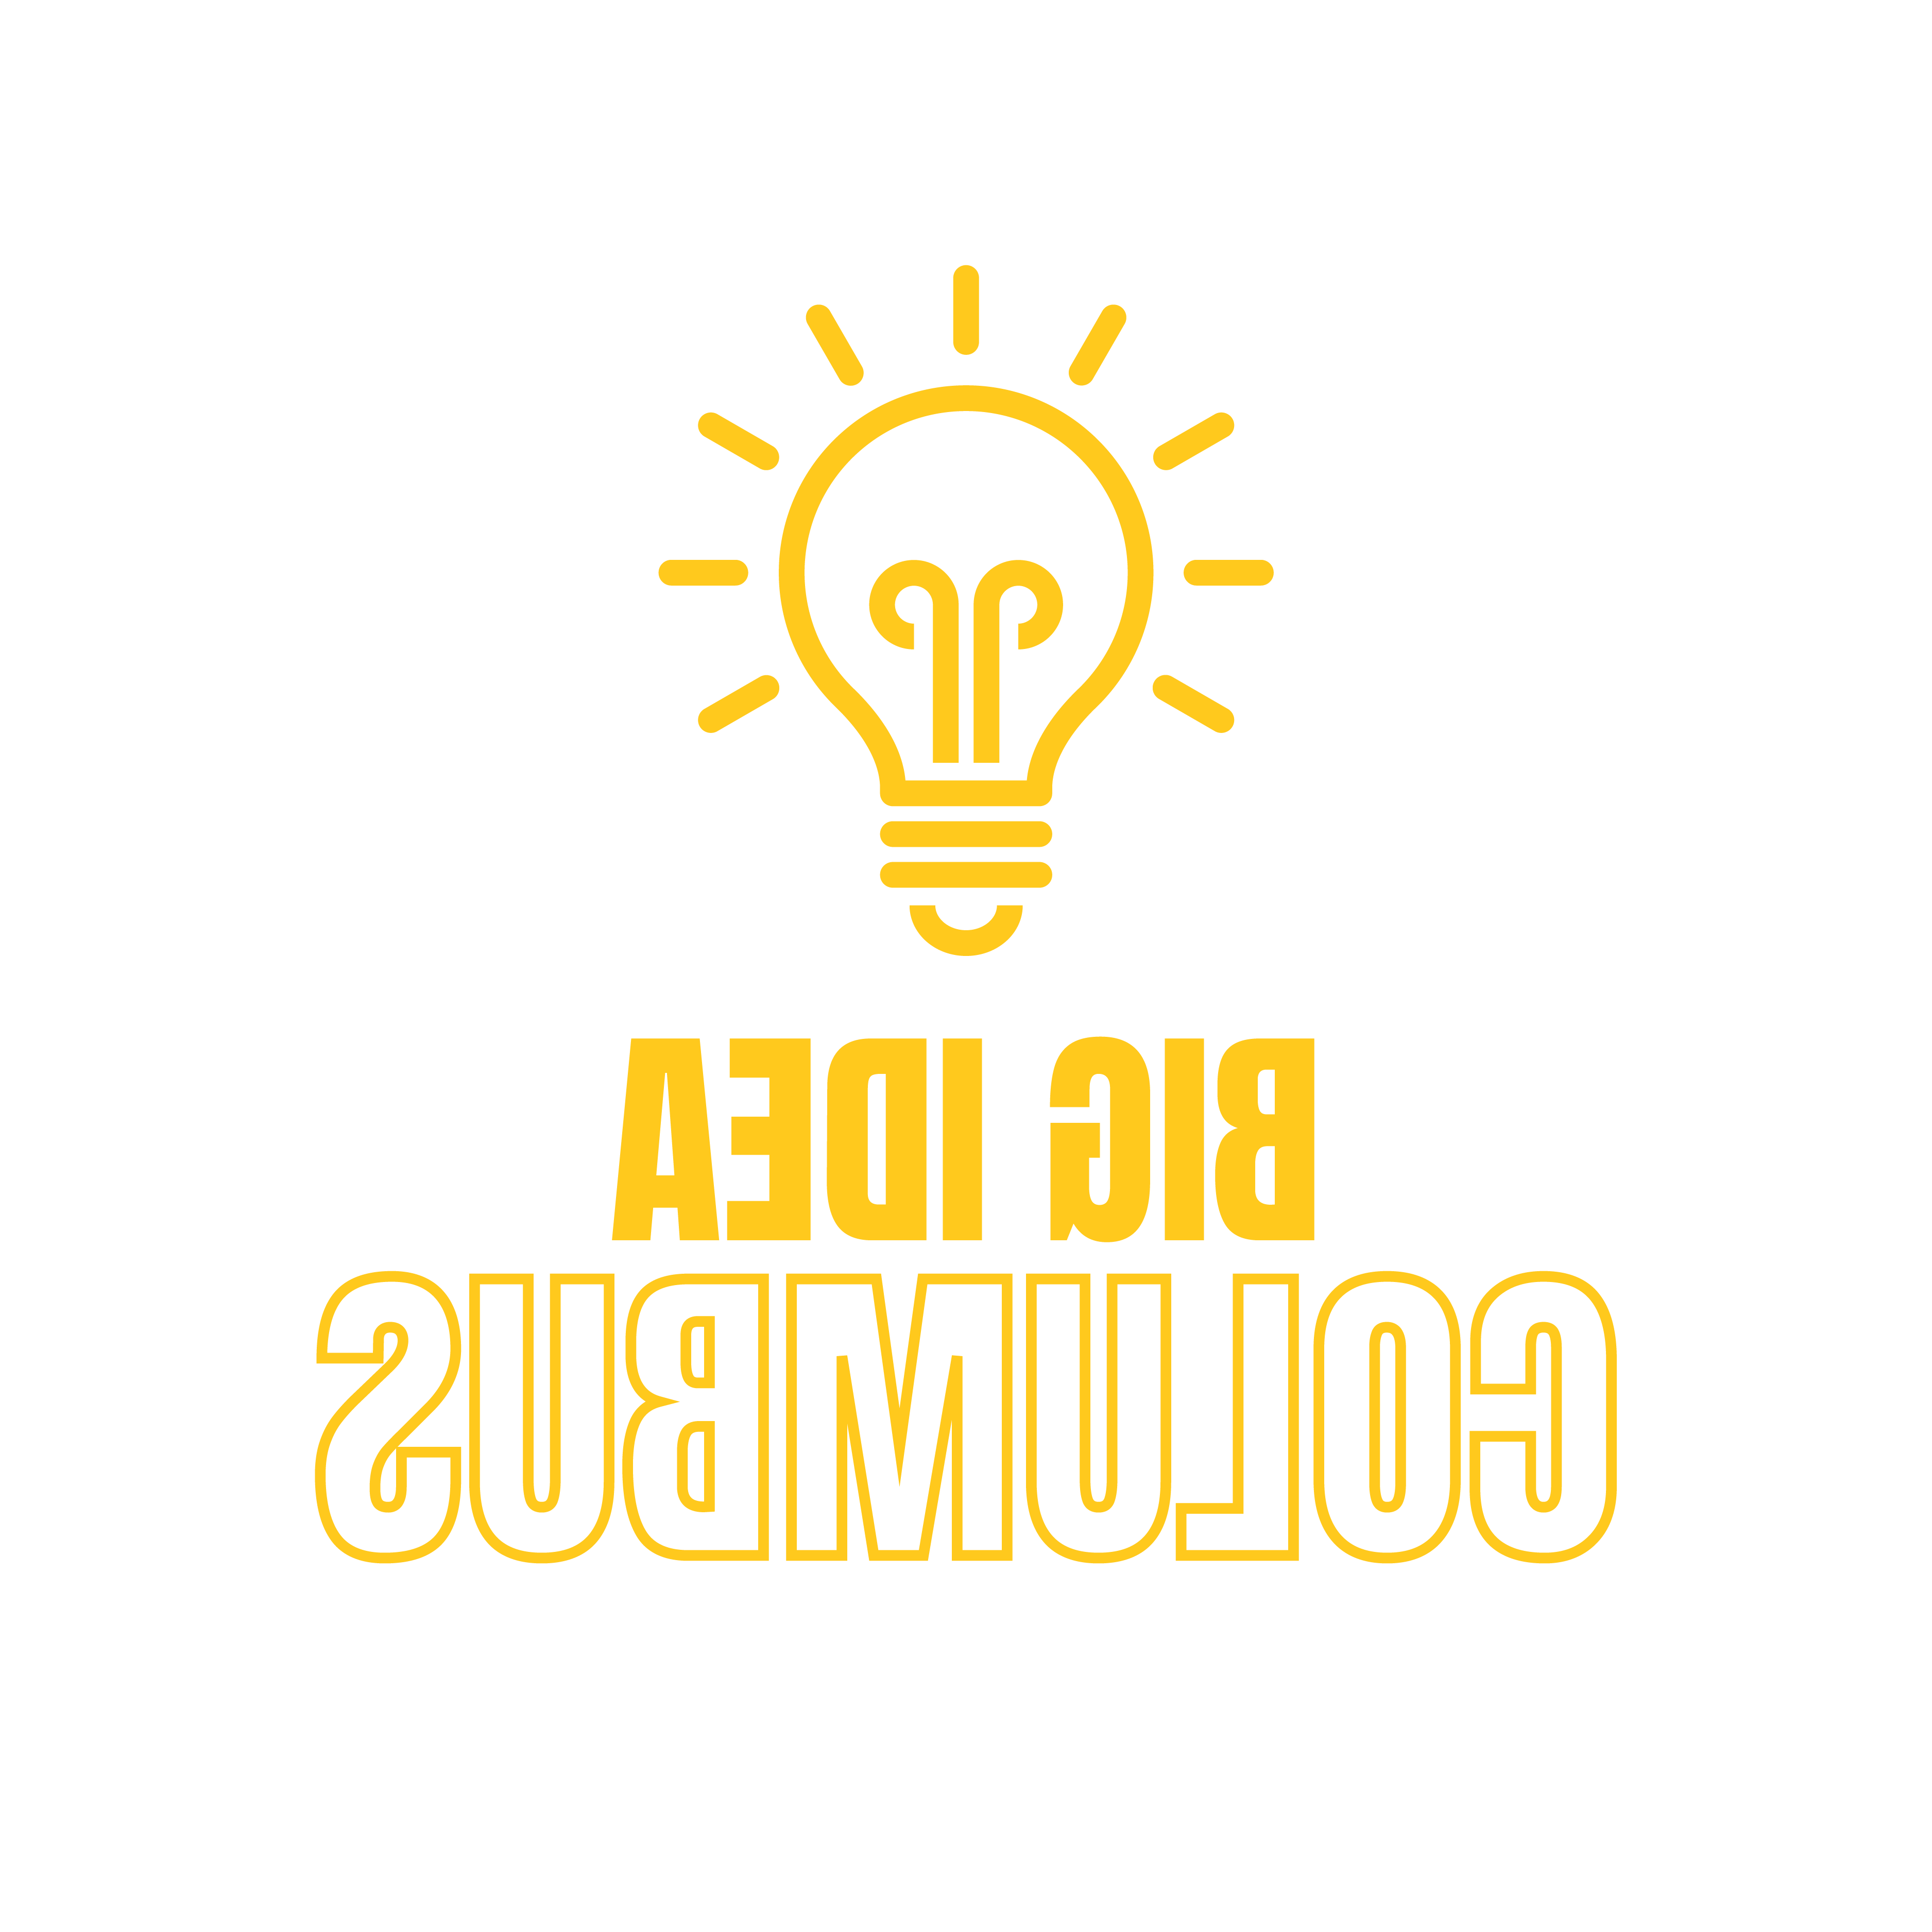 big idea Columbus graphic with lightbulb